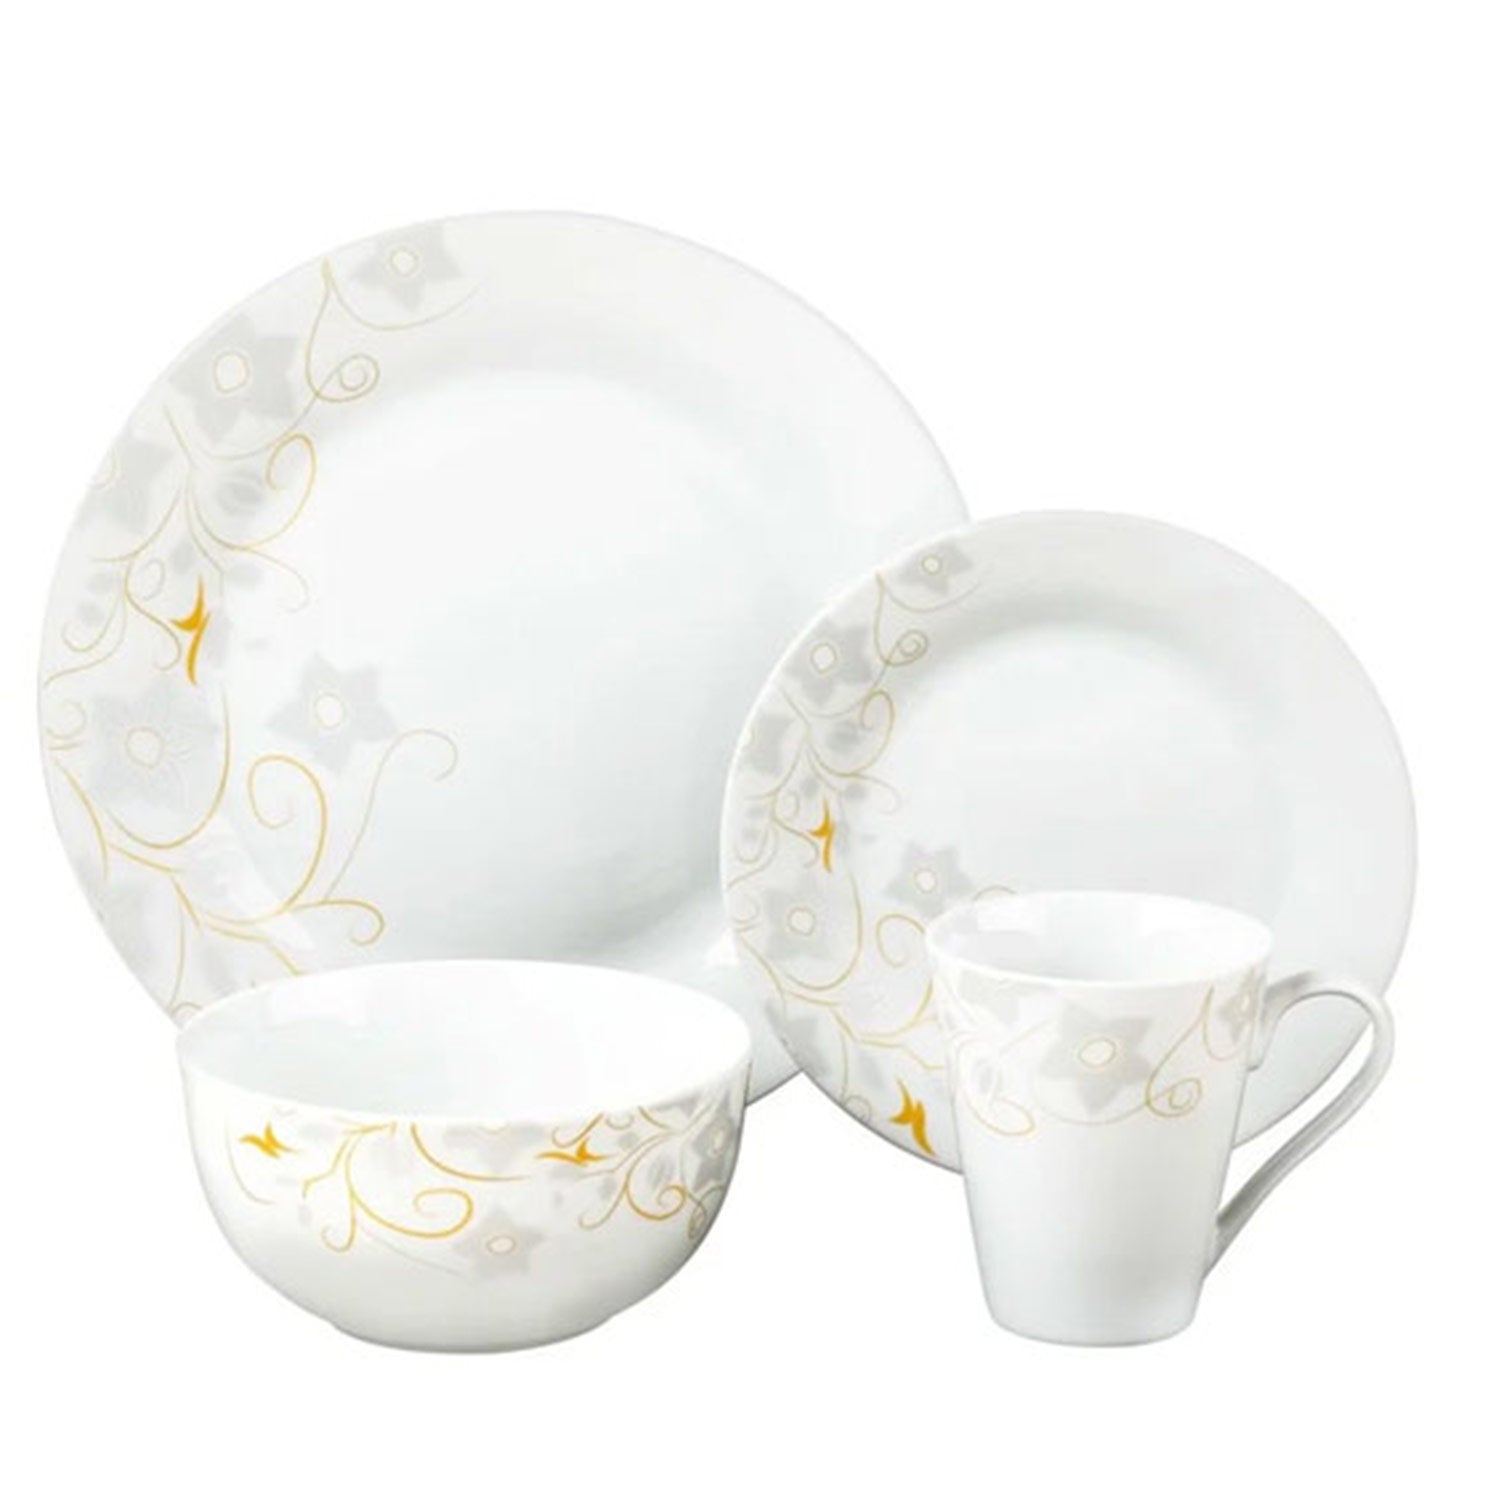 PREMIUS 16 Piece Ceramic Dinner Set, Heat Resistant Porcelain